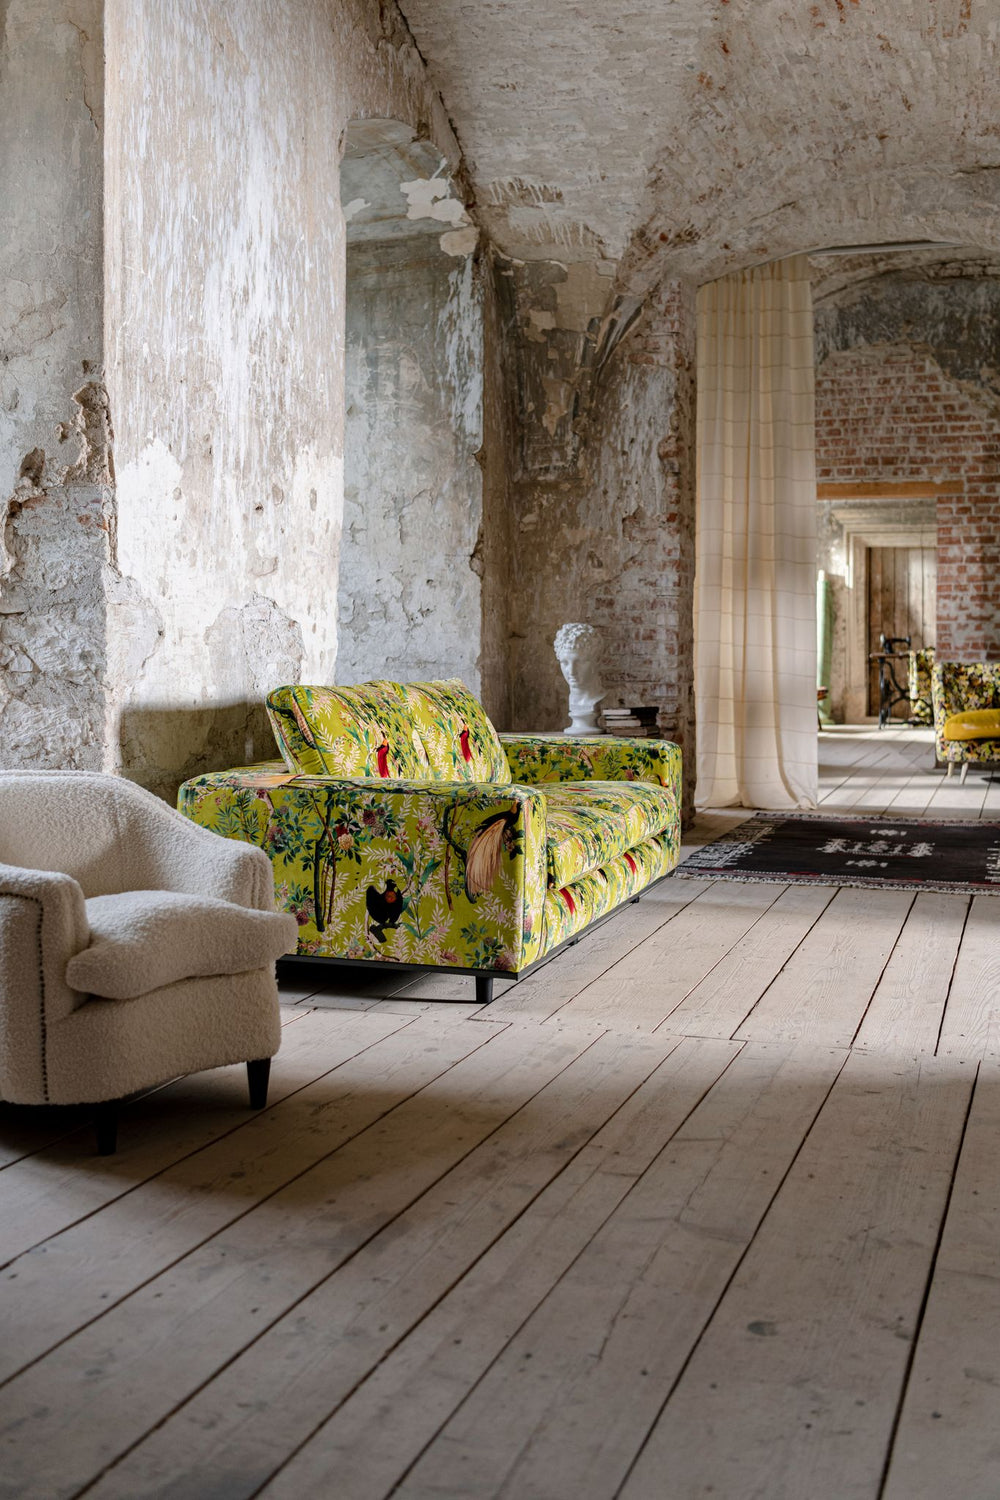 royal-garden-green-yellow-velvet-sofa-birds-flowers-modern-design-green-stitching-designer-luxury